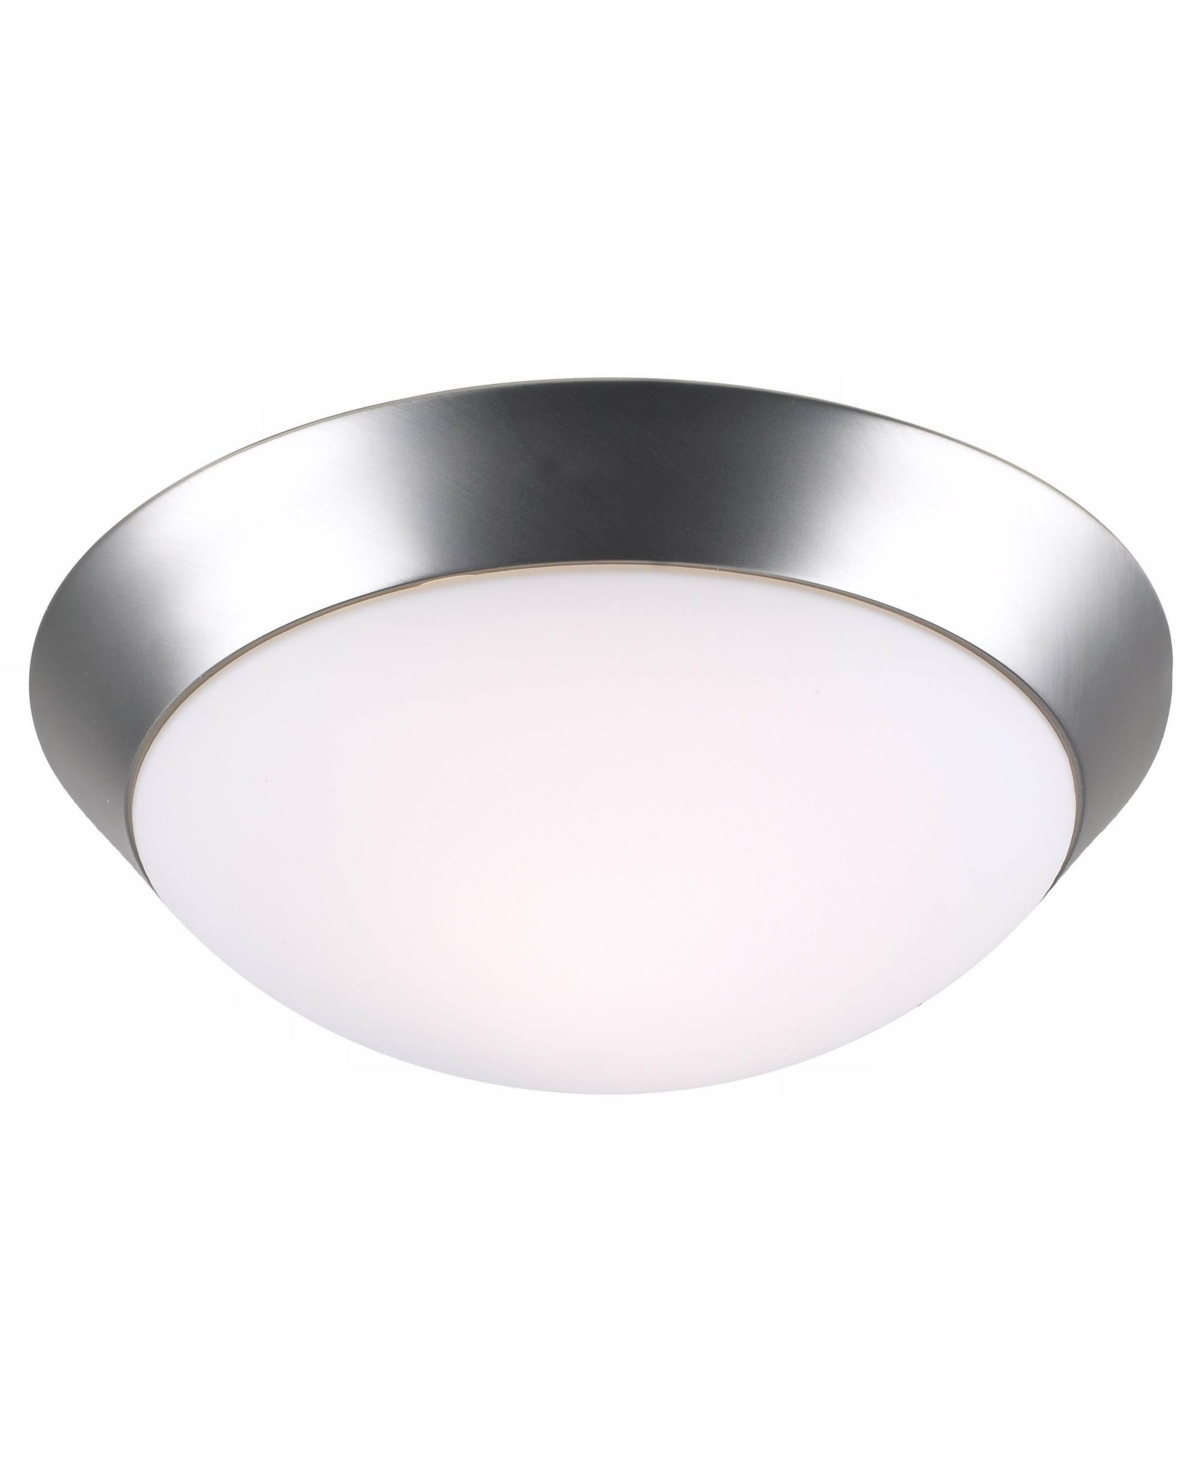 360 Lighting Davis Modern Ceiling Light Flush Mount Fixture 11" Wide Brushed Nickel Silver Metal Frosted Glass Do